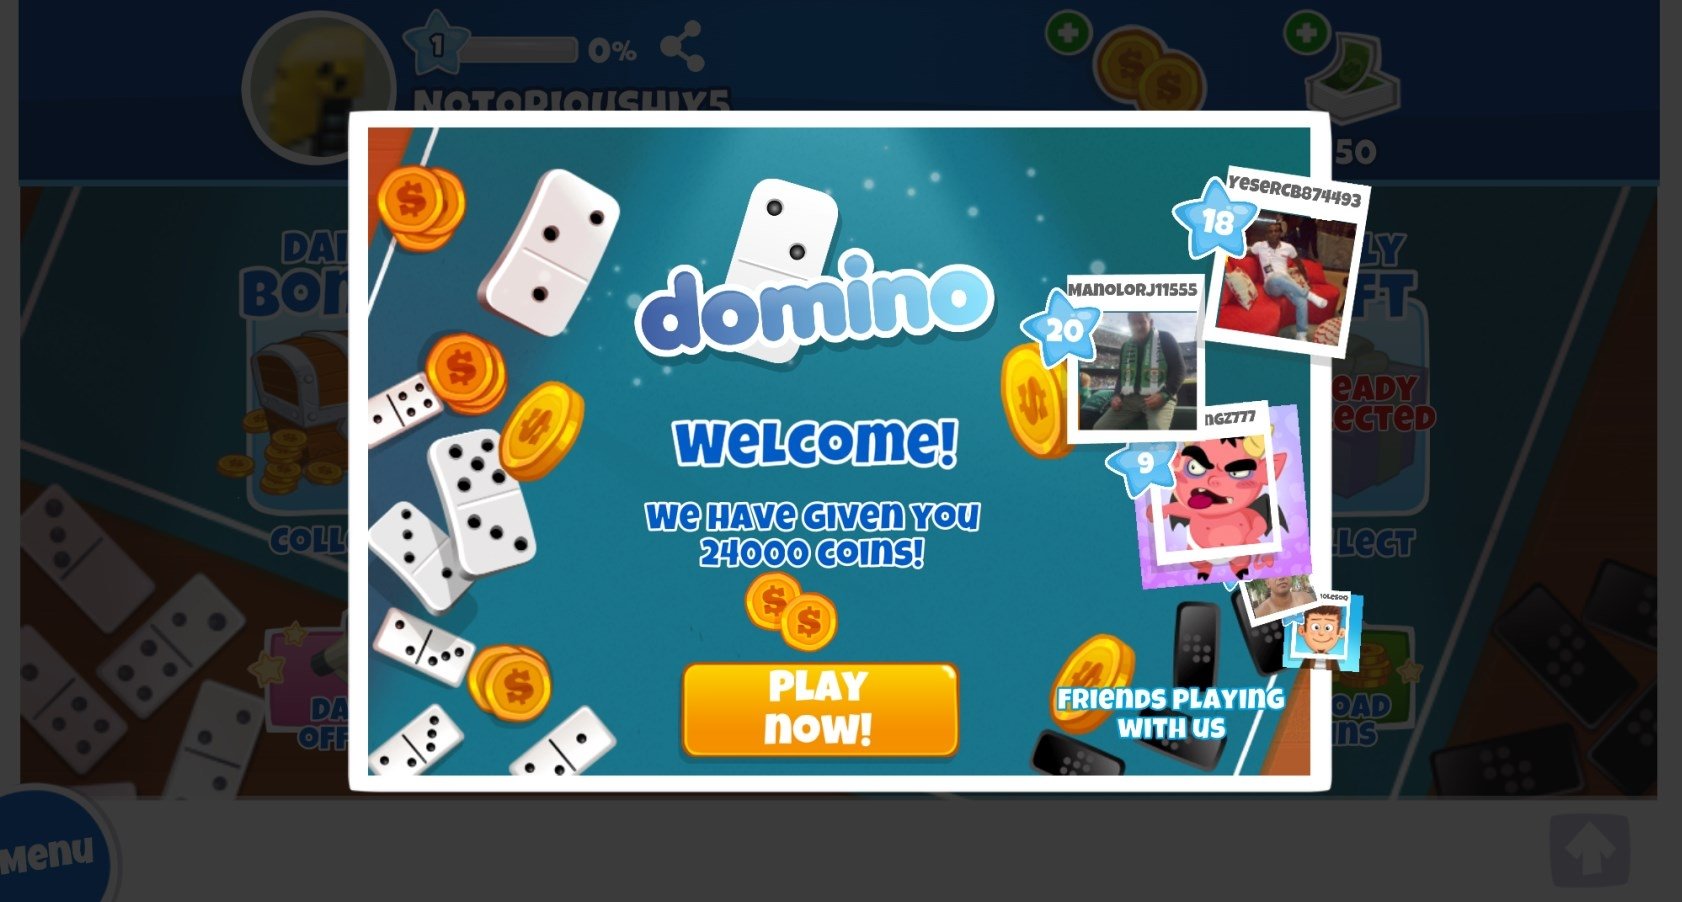 Dominoes Online Board Game by PlaySpace